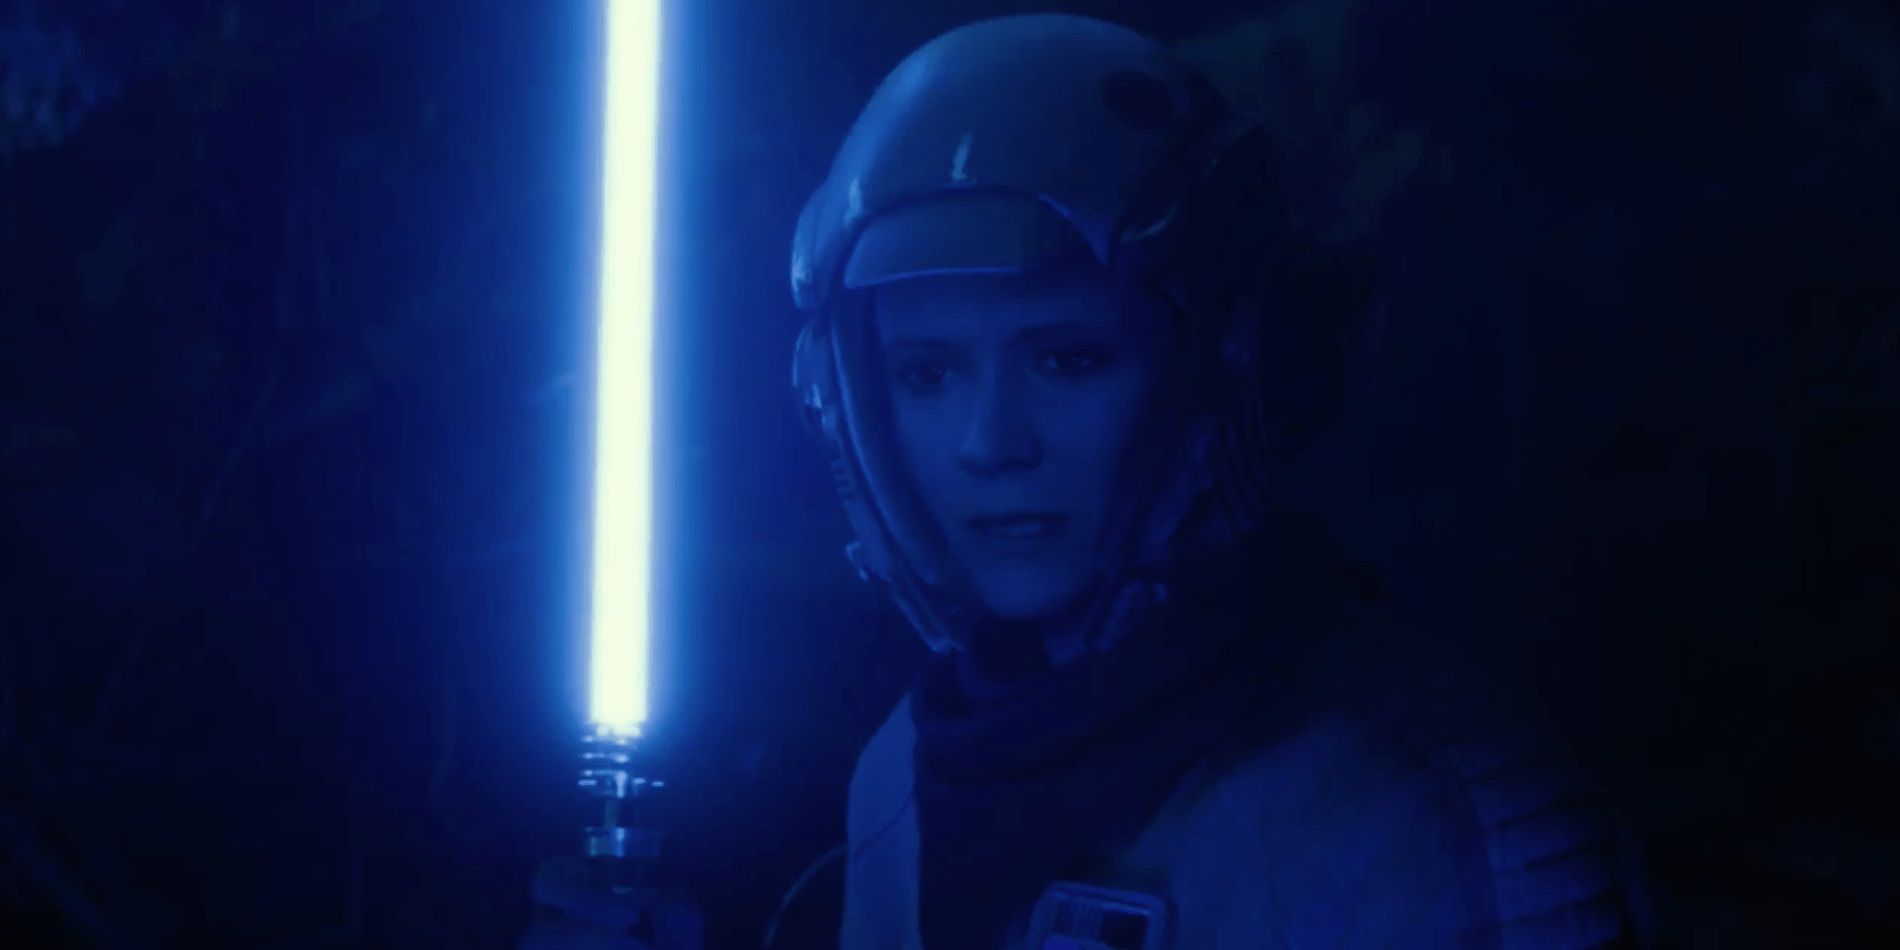 Billie Lourd as Leia in the flashback scene in The Rise of Skywalker